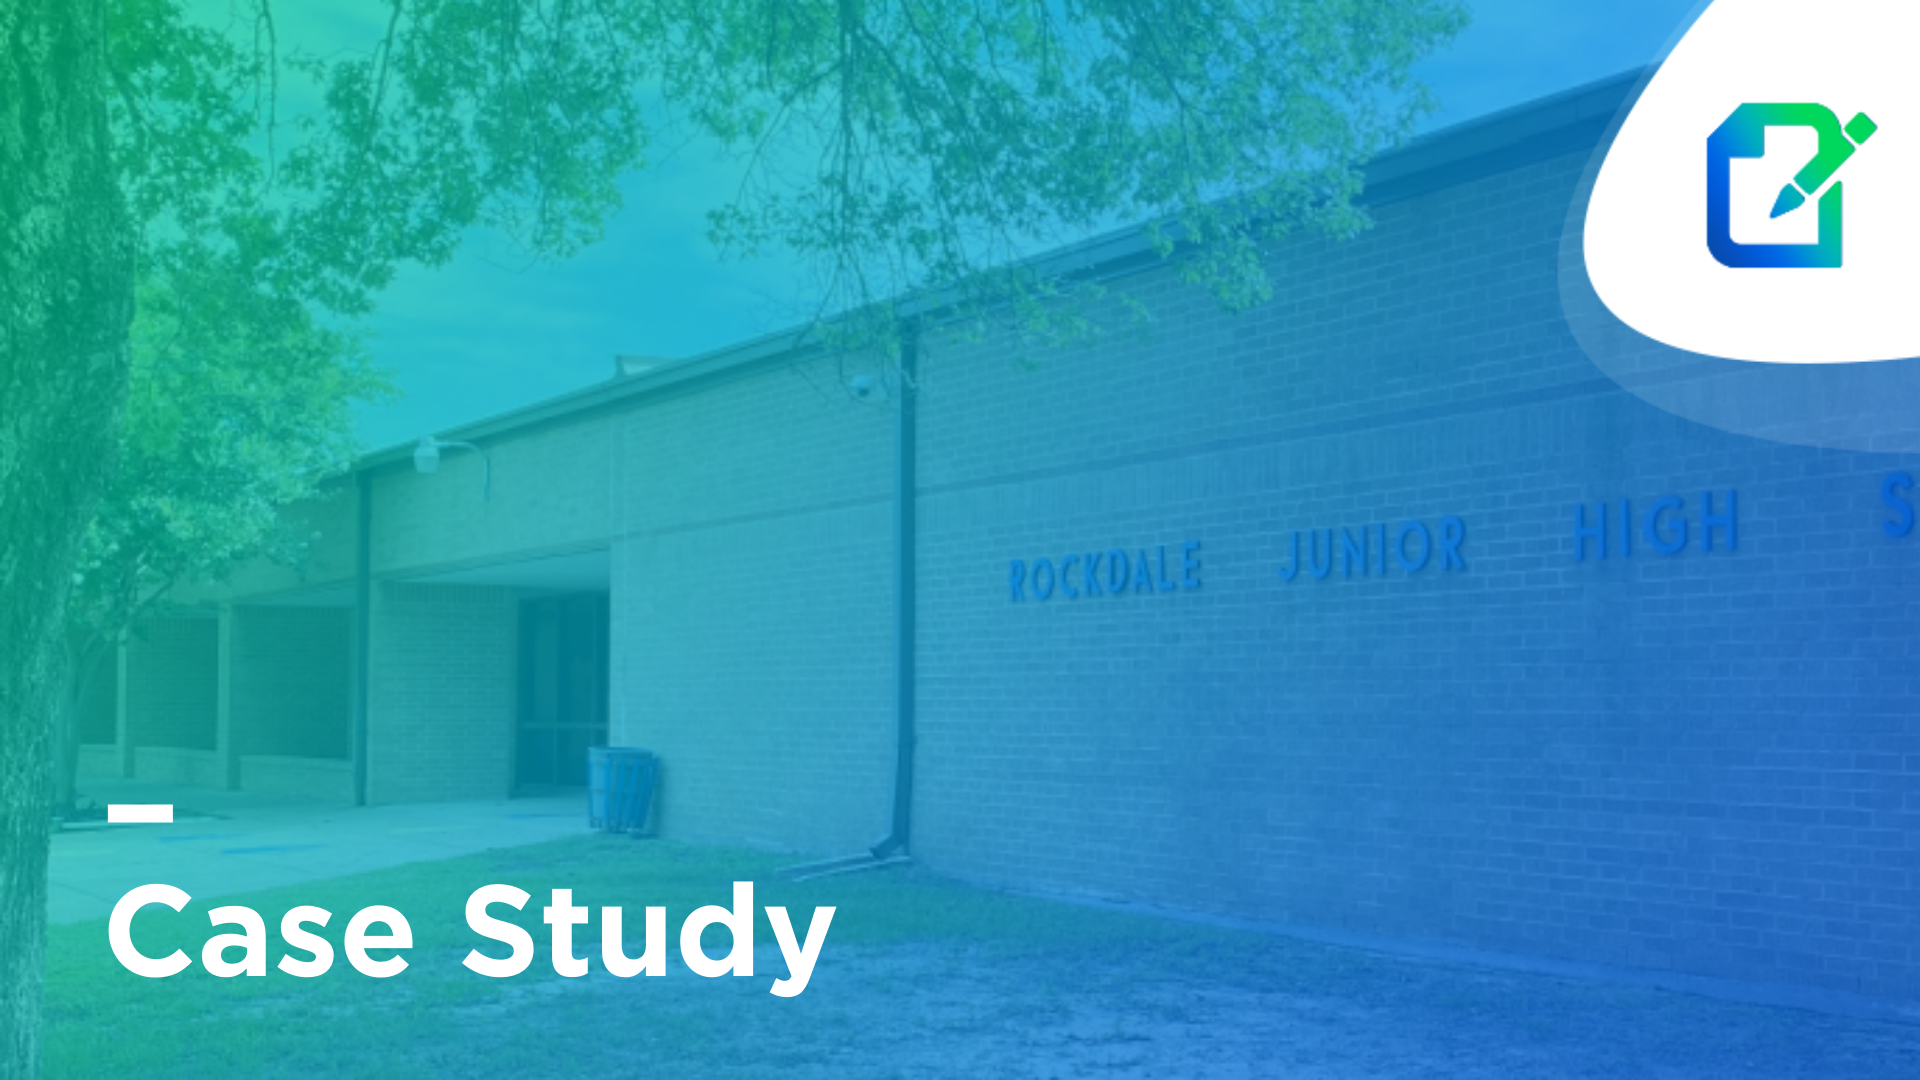 rockdale junior high case study